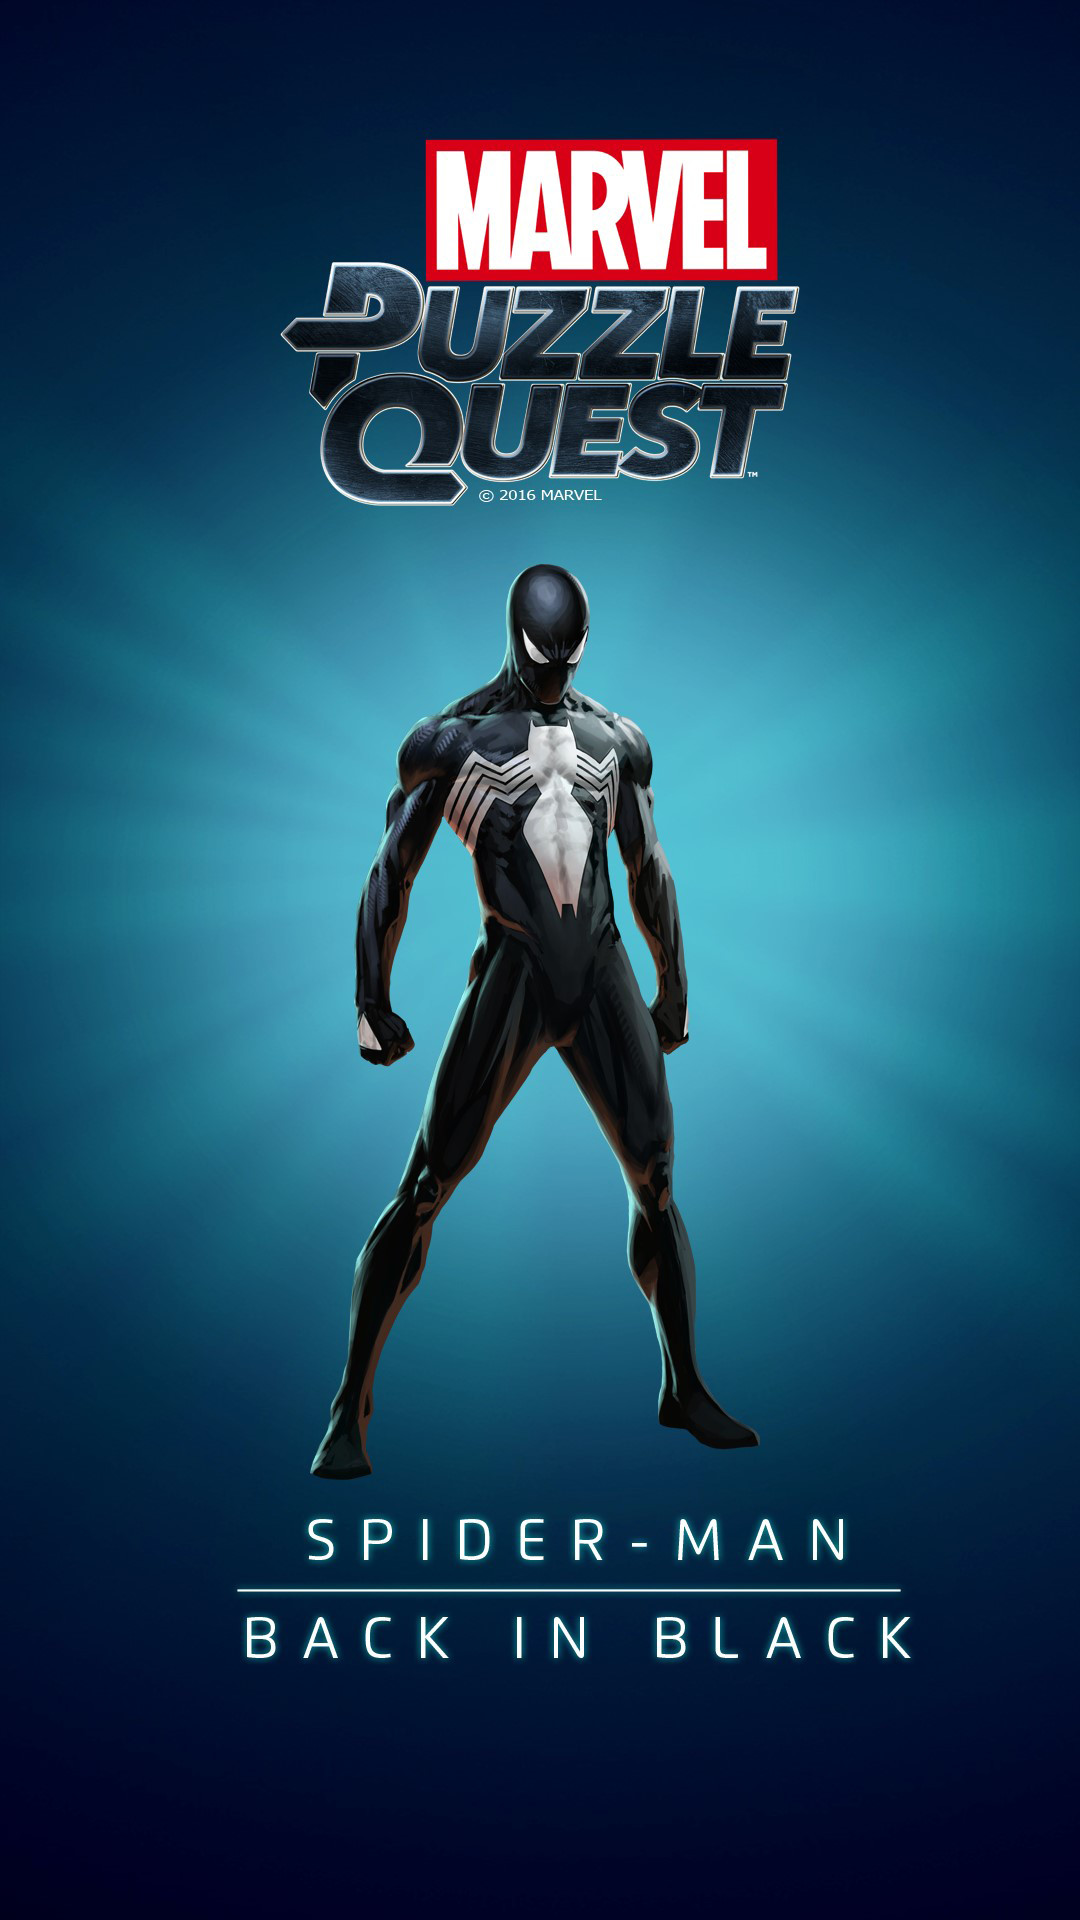 1080x1920 Spider-Man-BackinBlack-Poster-1080%C3%971920-wallpaper-